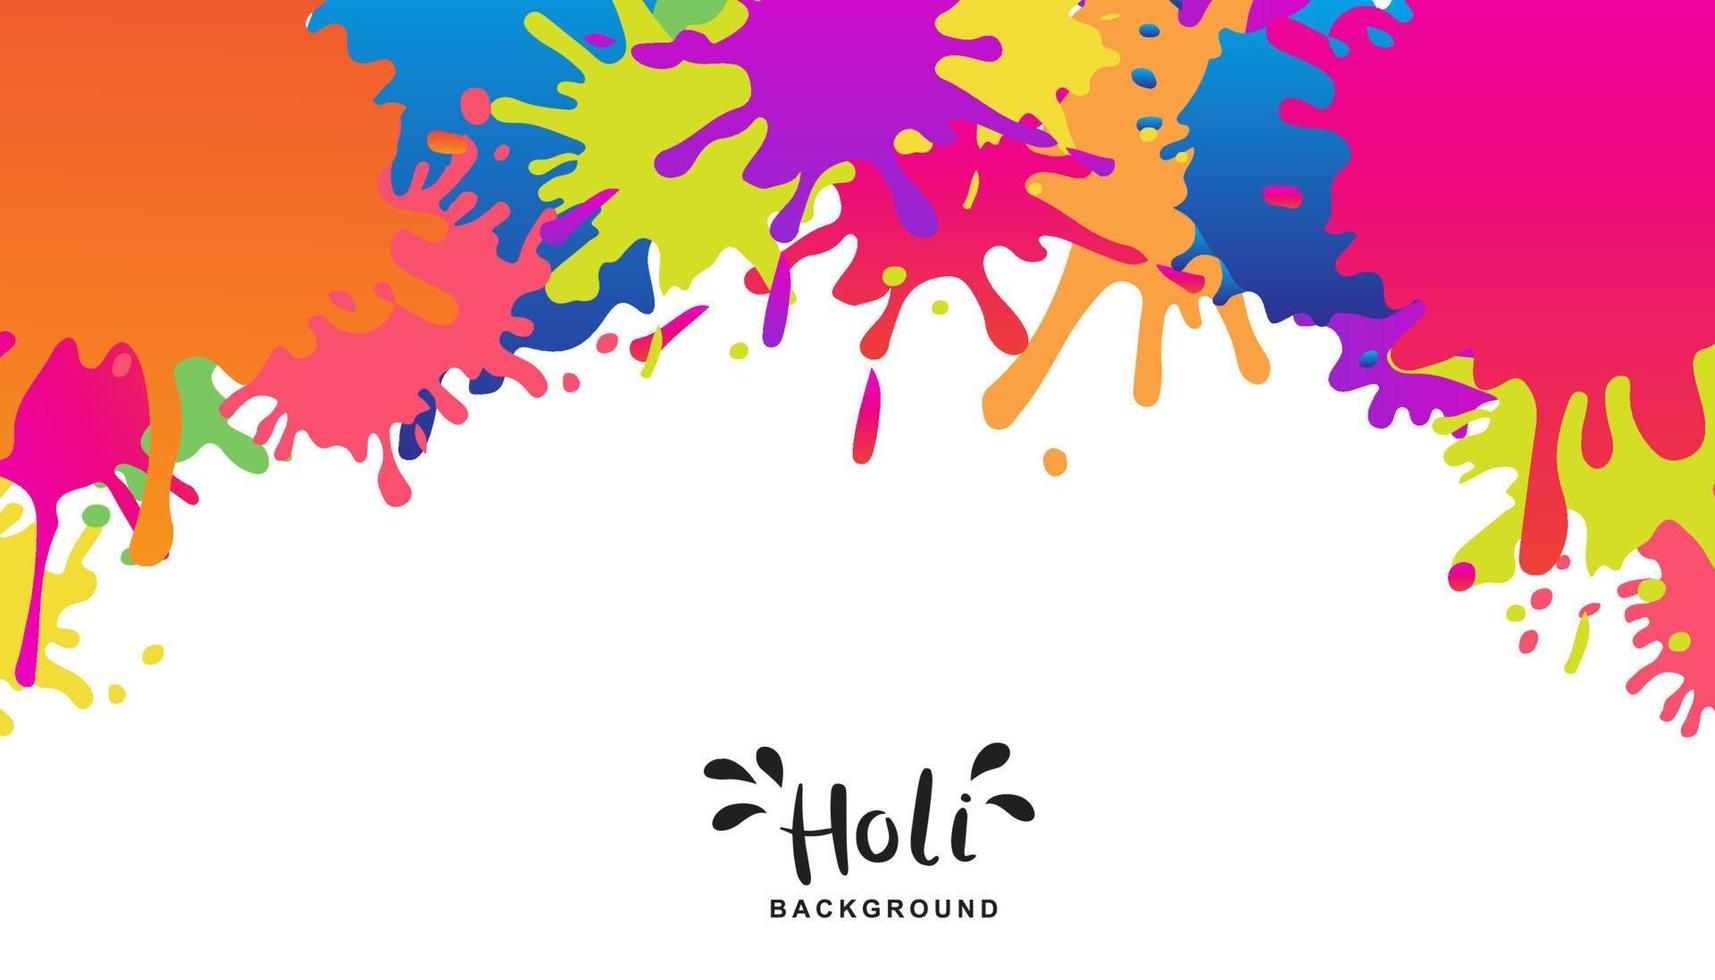 Happy Holi celebration banner. background design for Indian Festival of Colors, social media, website banners, poster for sale and promotion template. vector illustration.